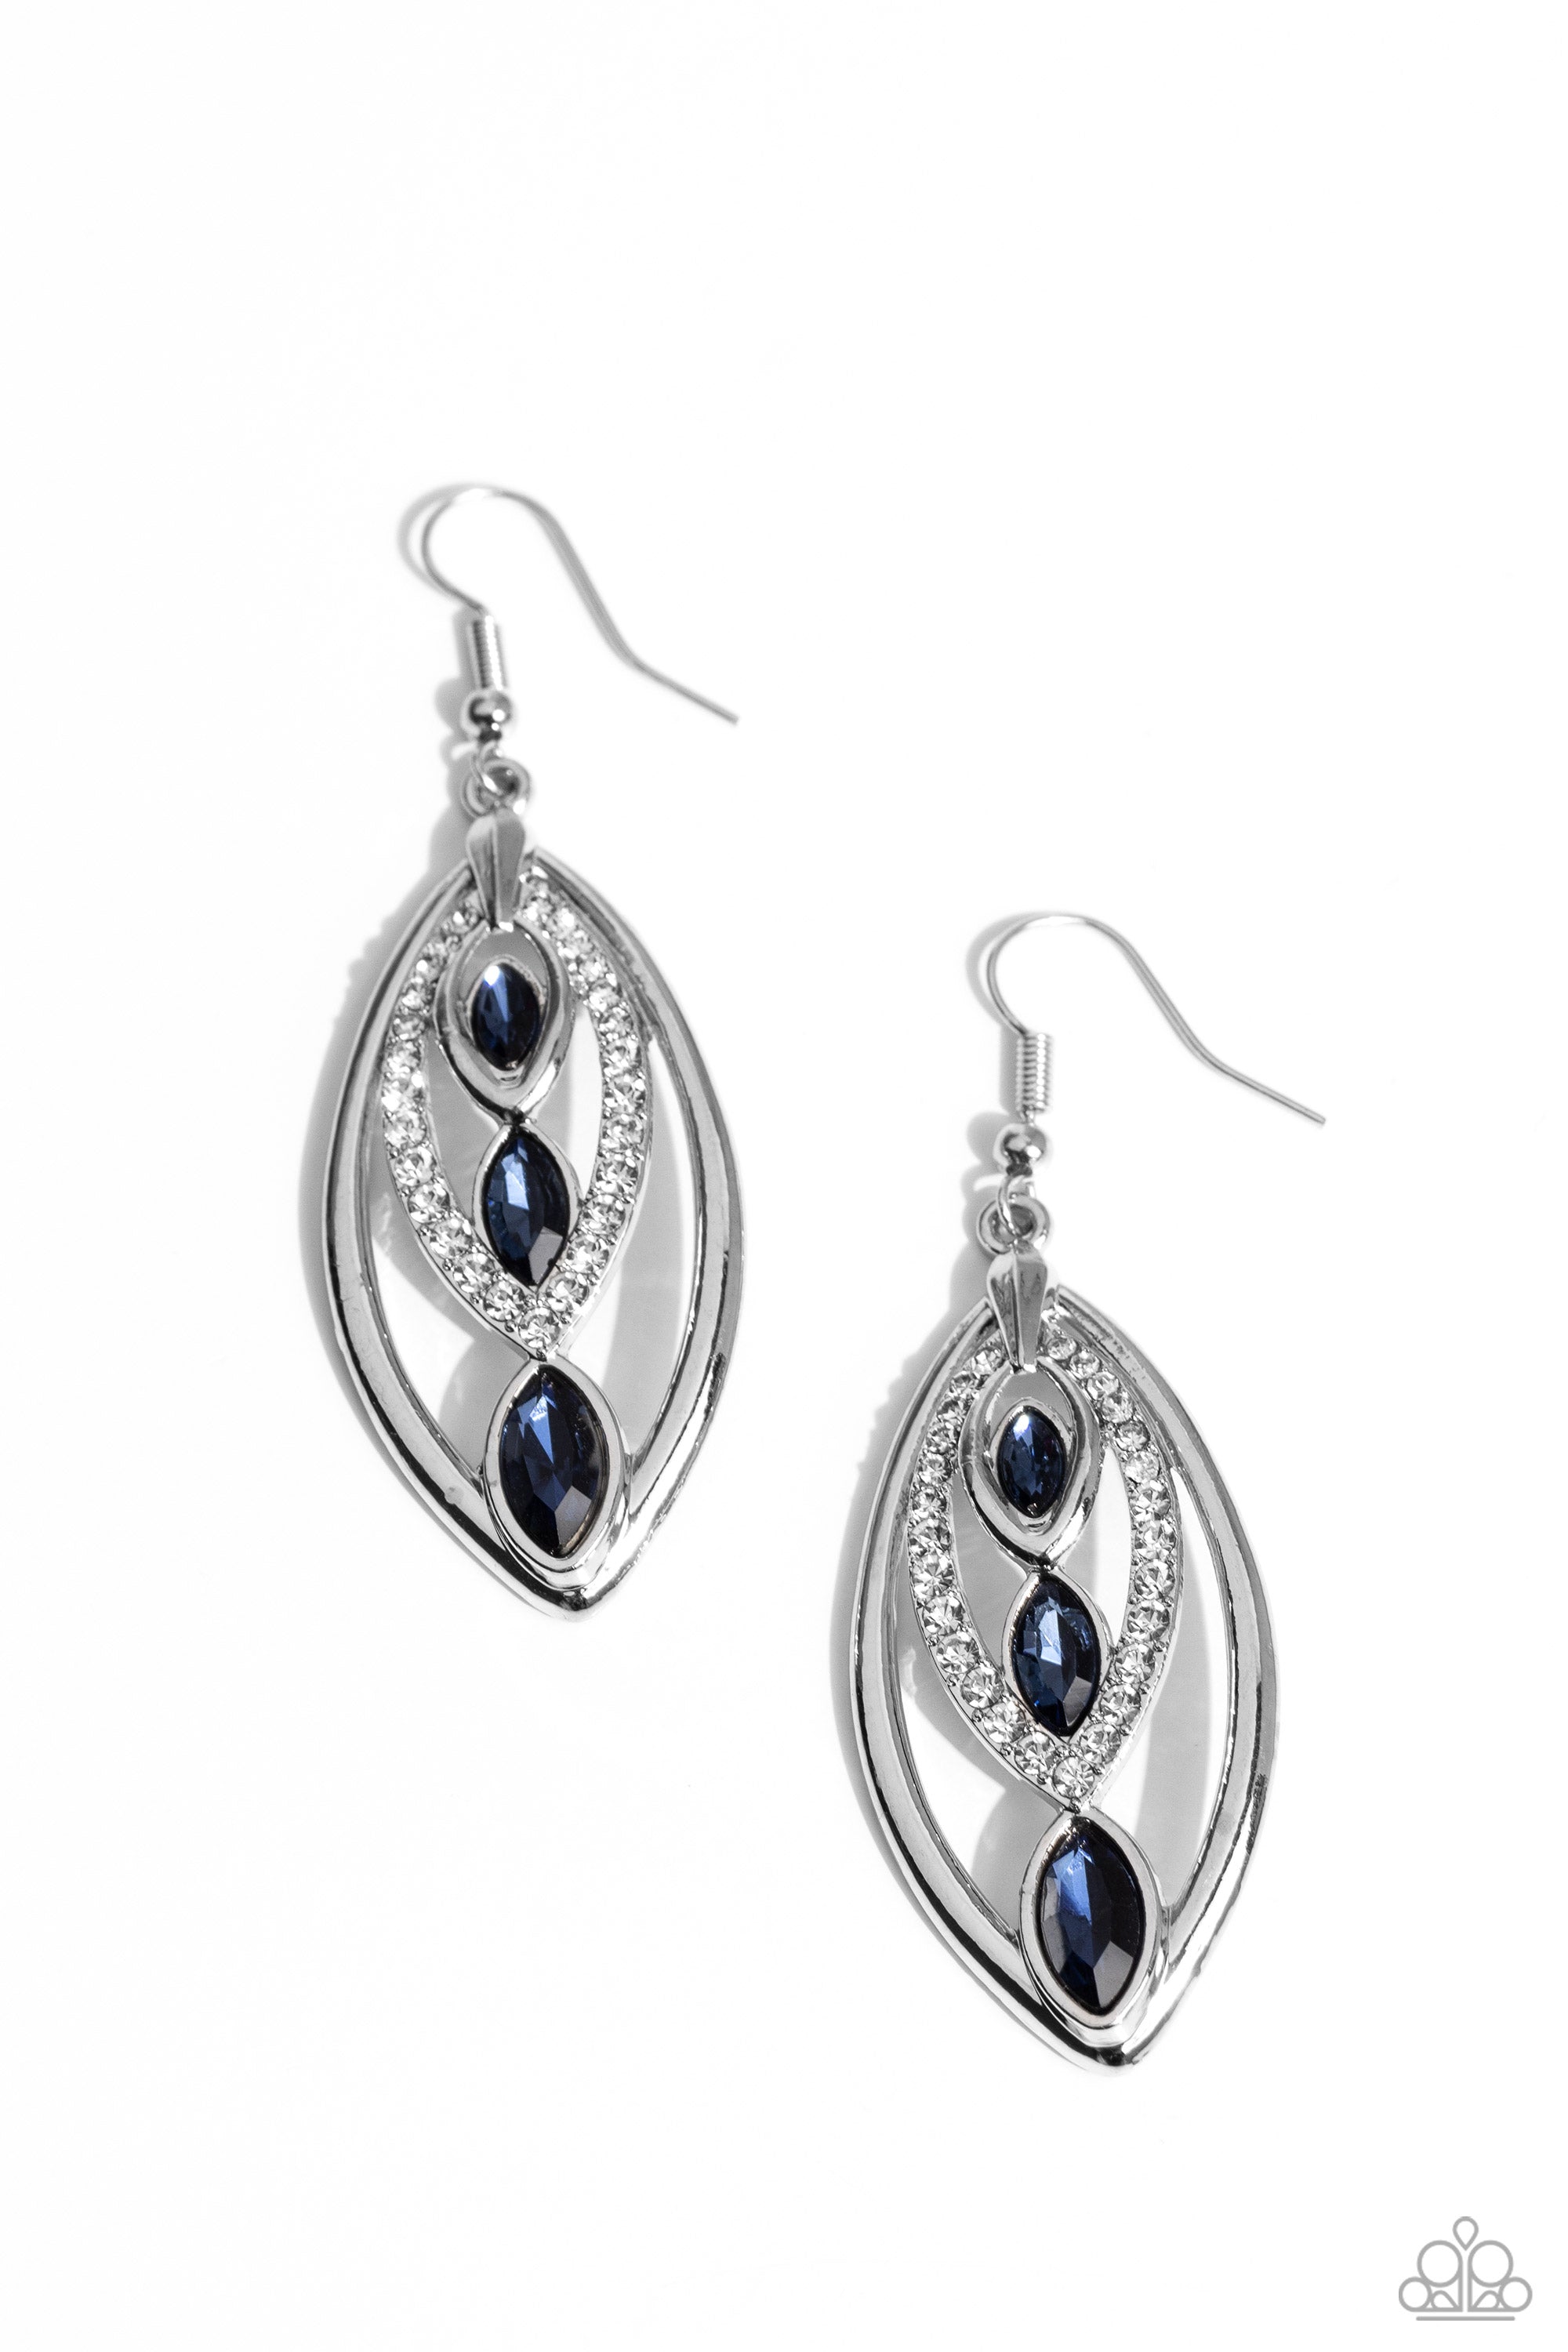 Extra Exuberant Blue Rhinestone Earrings - Paparazzi Accessories- lightbox - CarasShop.com - $5 Jewelry by Cara Jewels